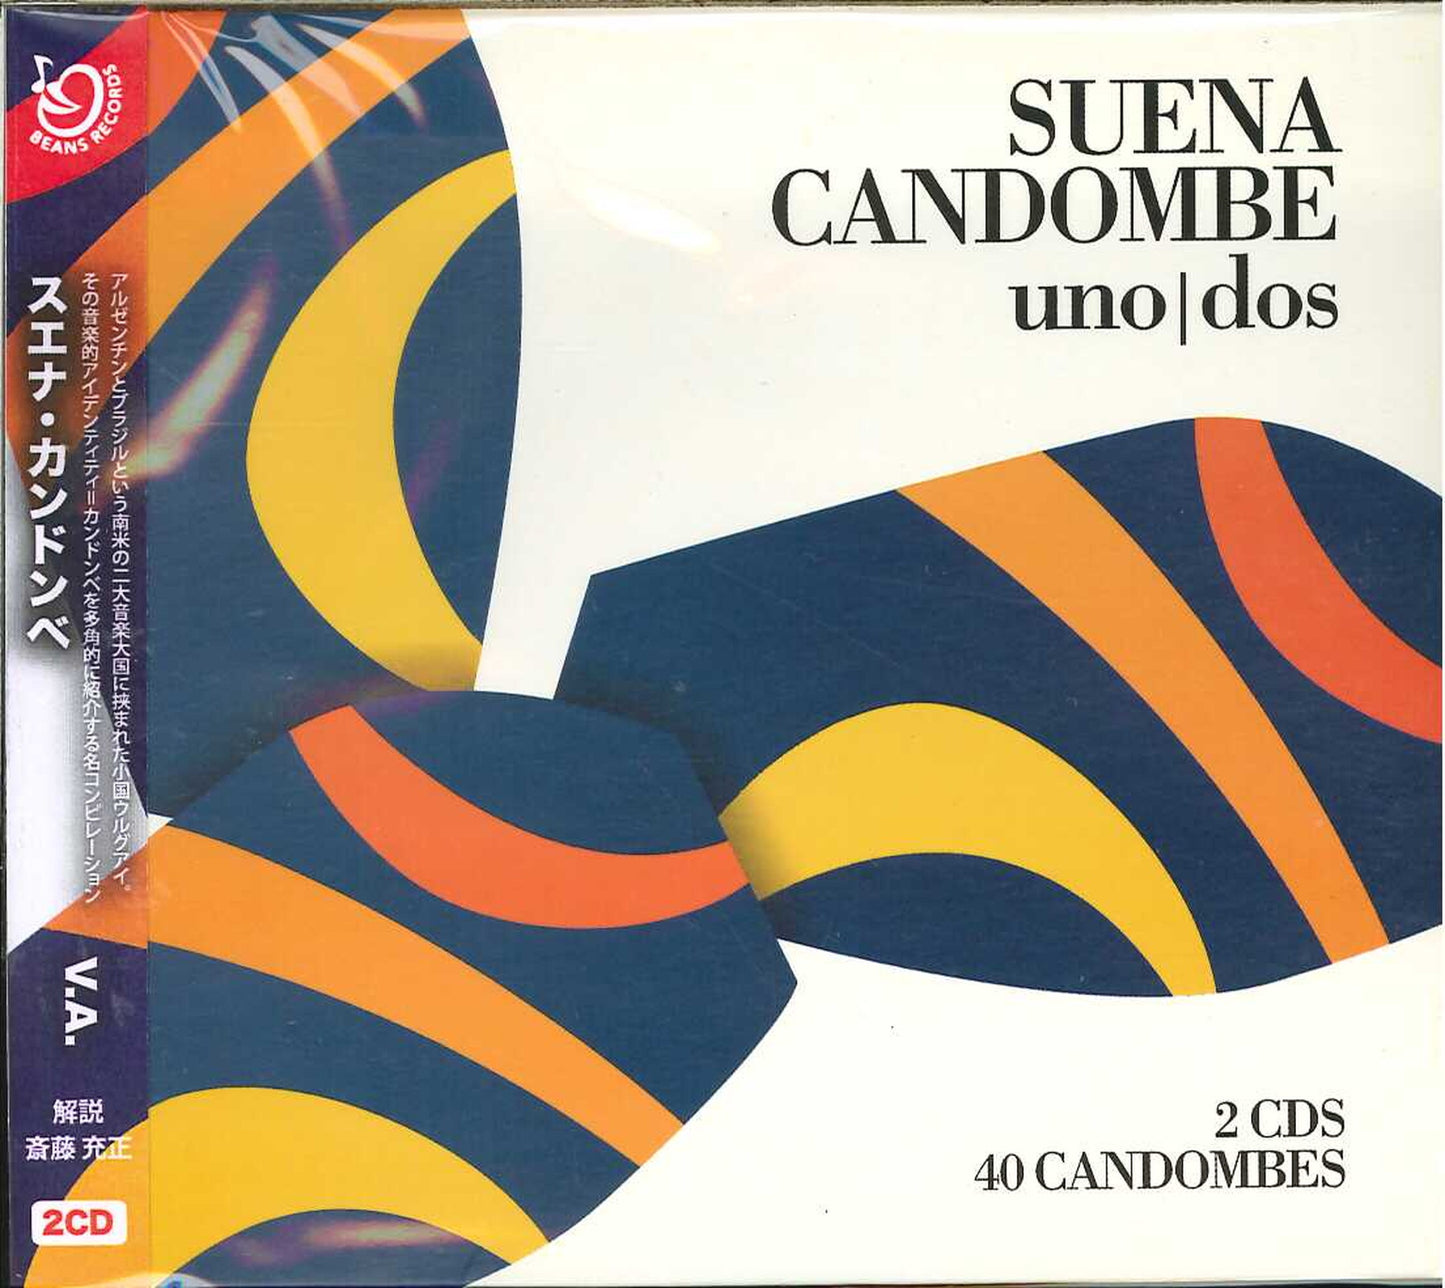 V.A. - Suena Candombe Uno / Dos - Japan  2 Mini LP CD